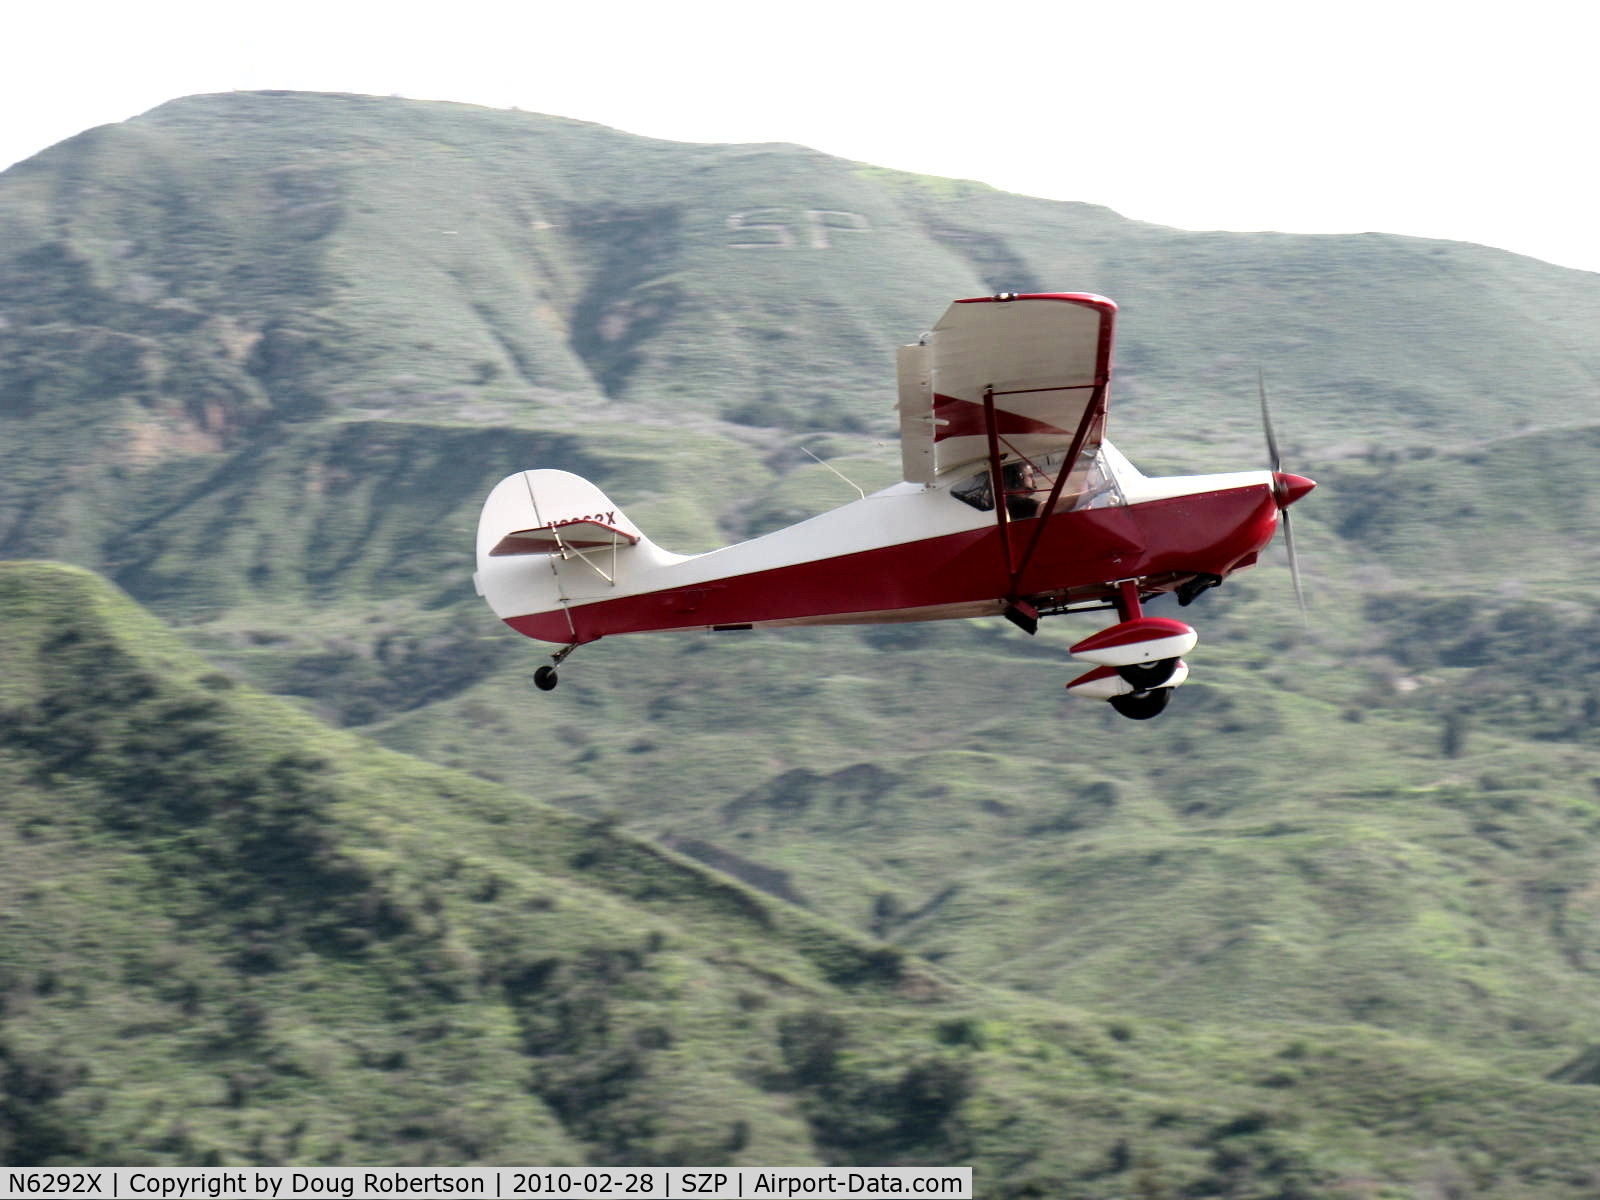 N6292X, 1997 Avid Flyer C/IV C/N 999, 1997 Latker-Kane AVID FLYER C/IV, Subaru A/B conversion, takeoff climb Rwy 22